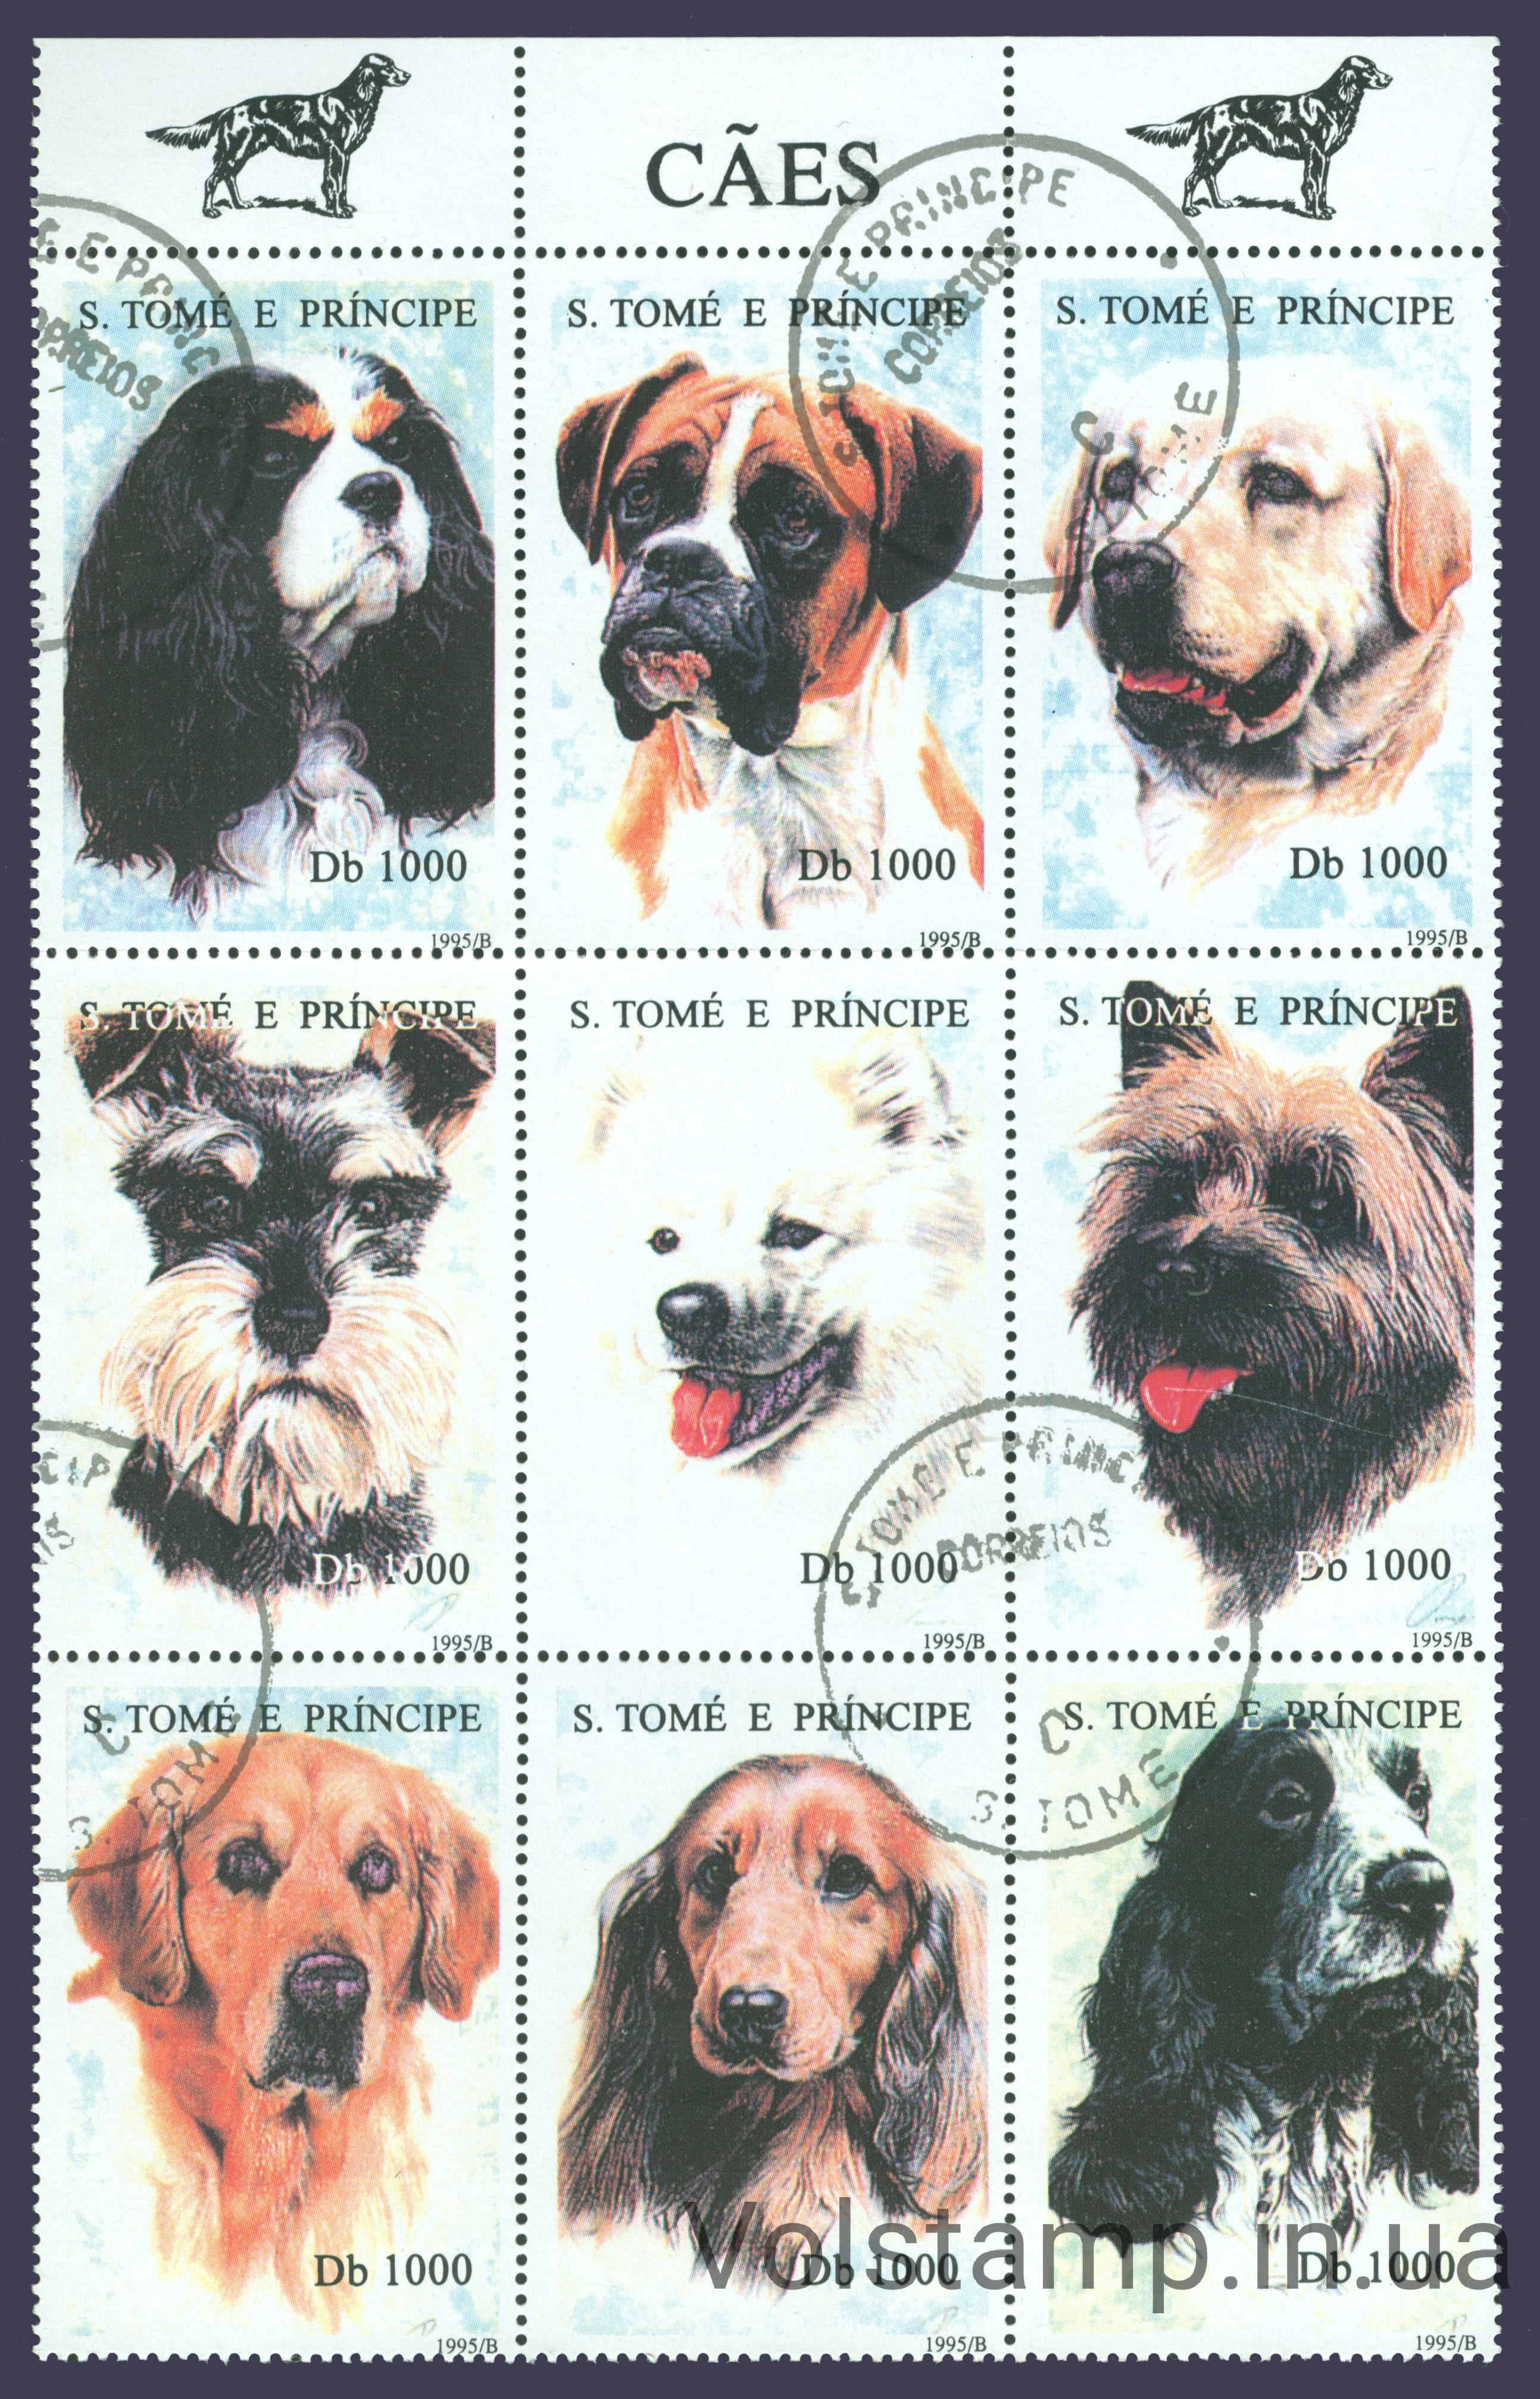 1995 Sao Tome and Principe Piece of Sheet (Dogs) Used №1571-1579